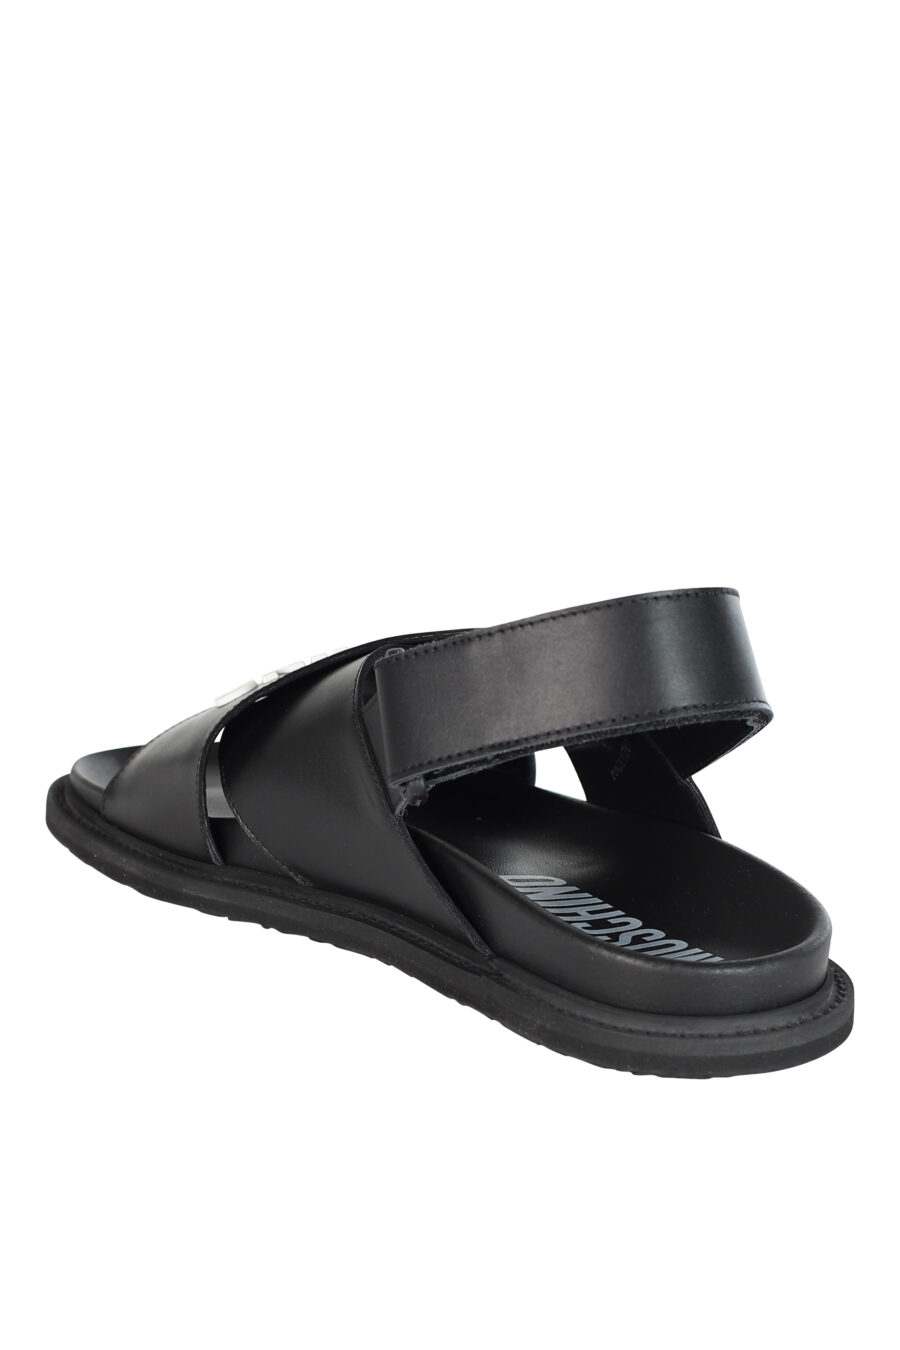 Black crossed sandals with white maxilogo - 8059022514769 4